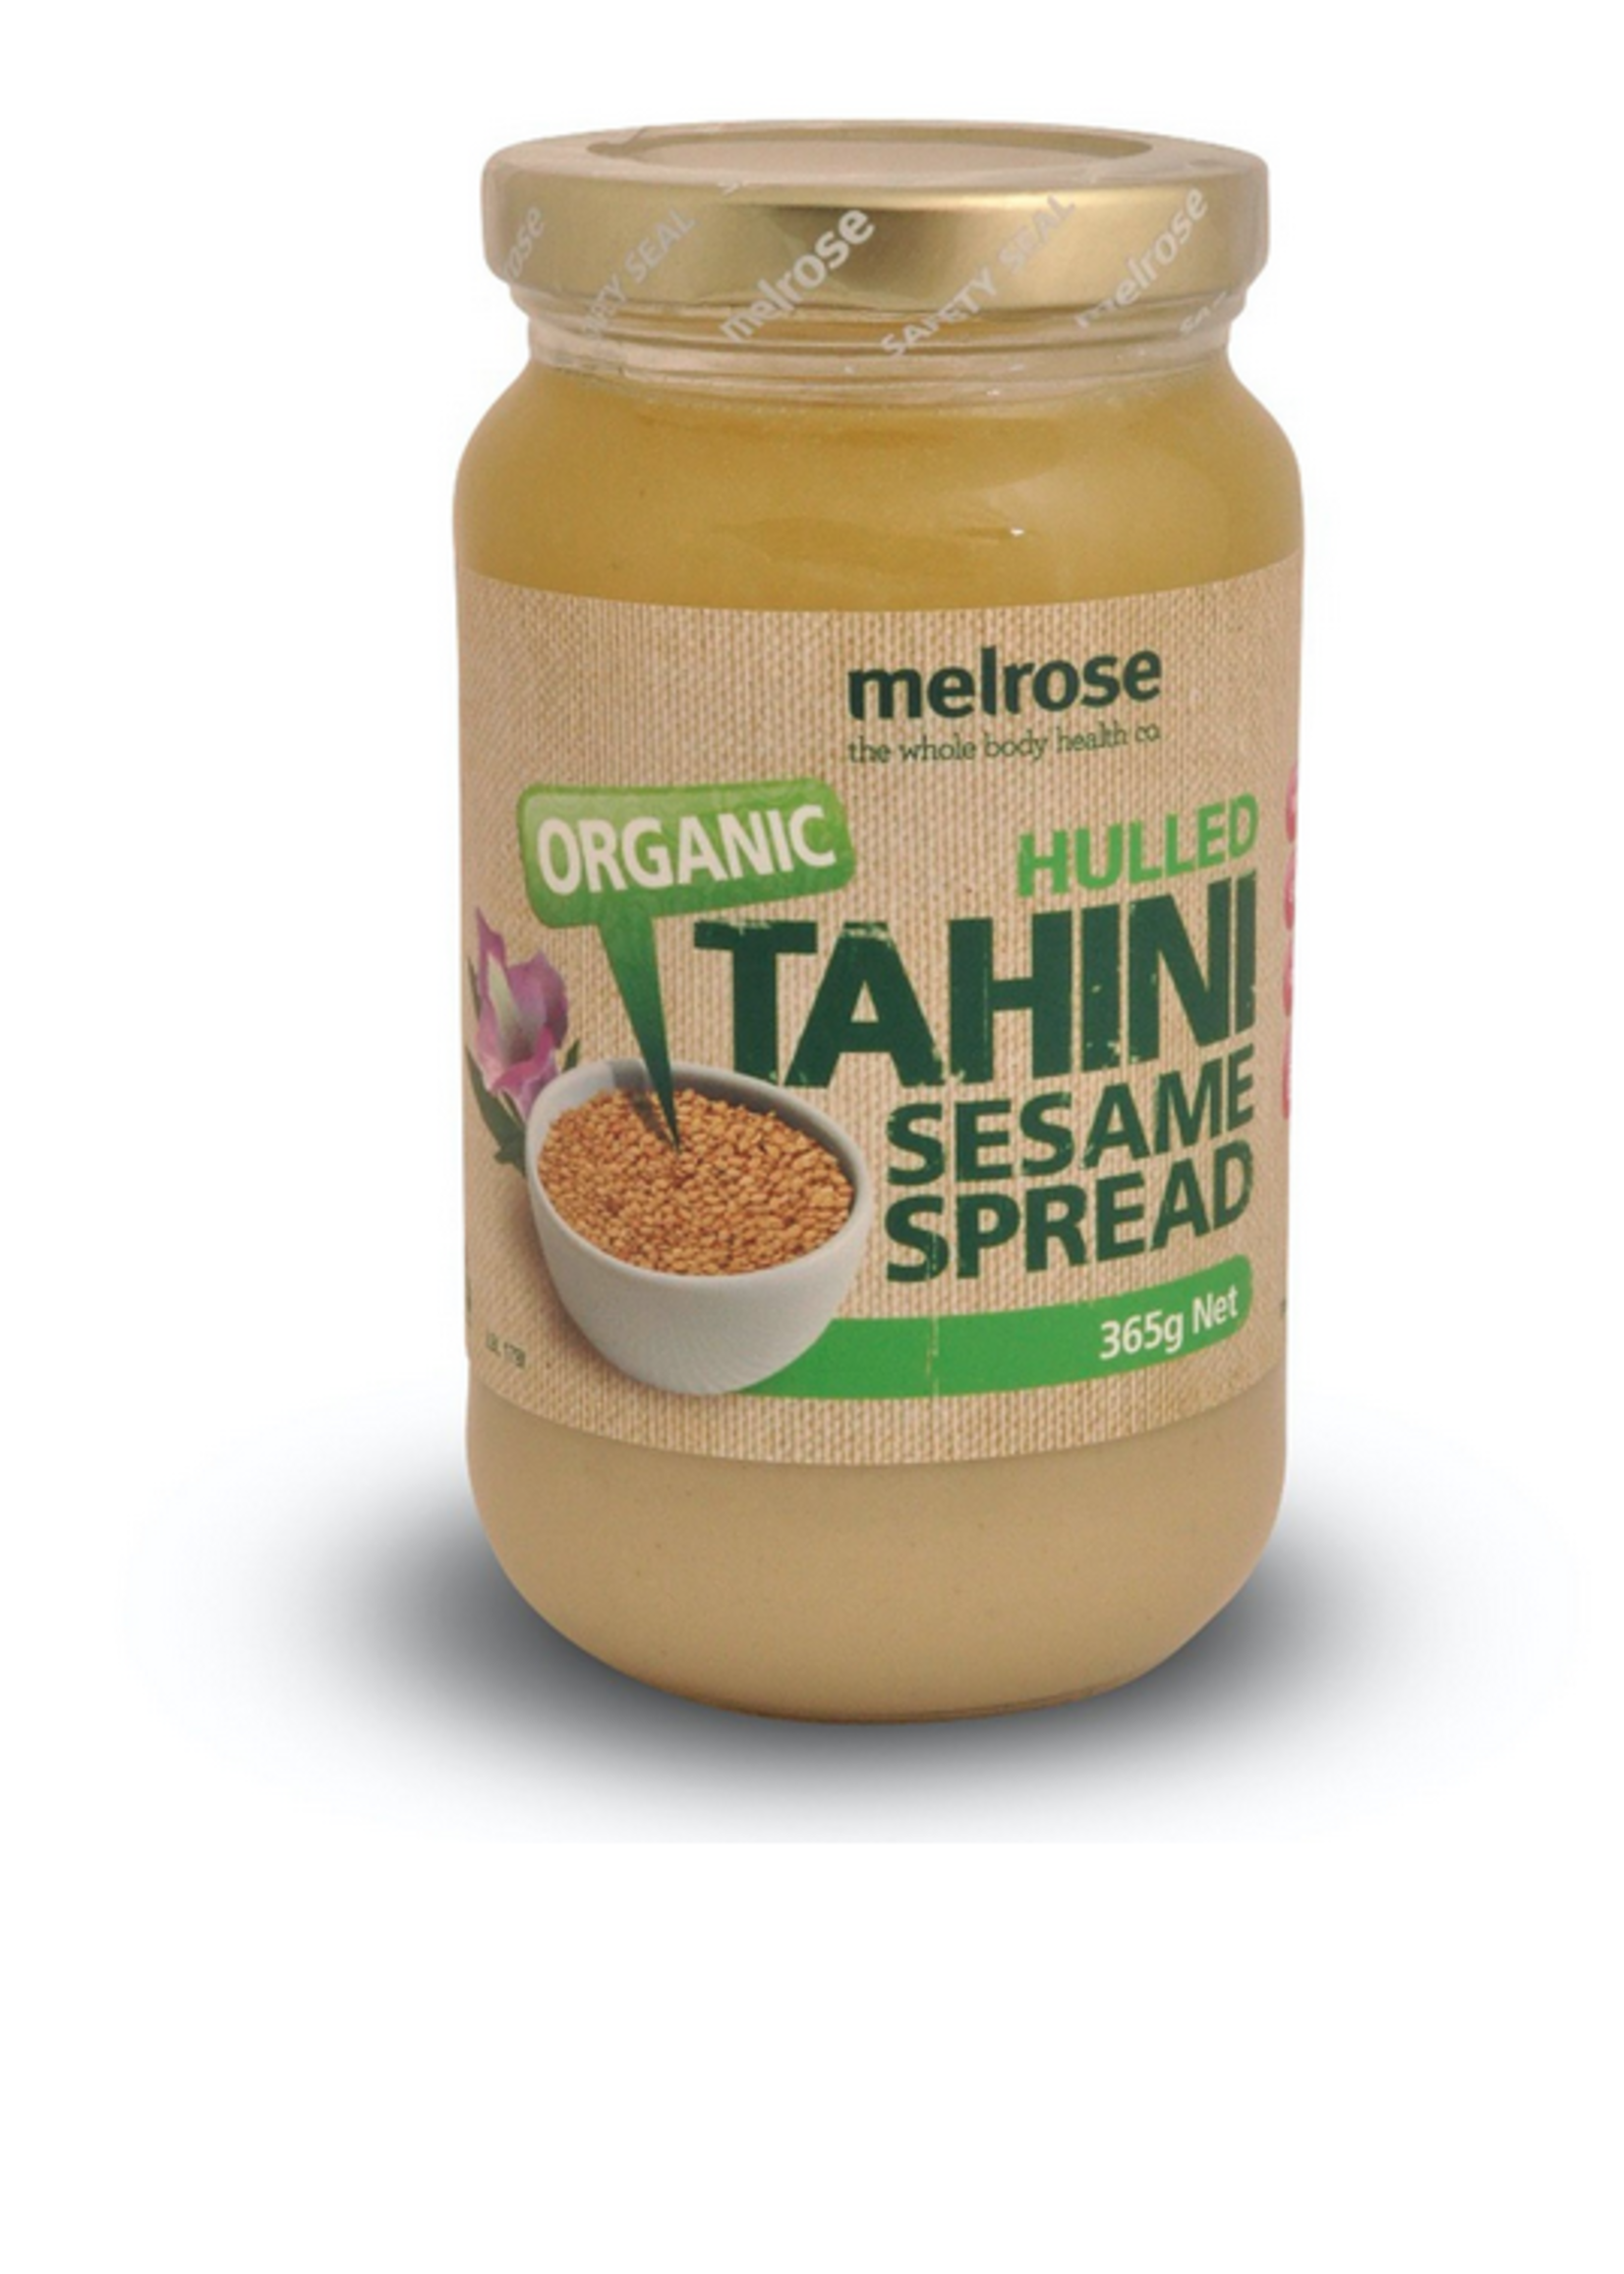 MELROSE Melrose Organic Tahini Sesame Spread Hulled 365g